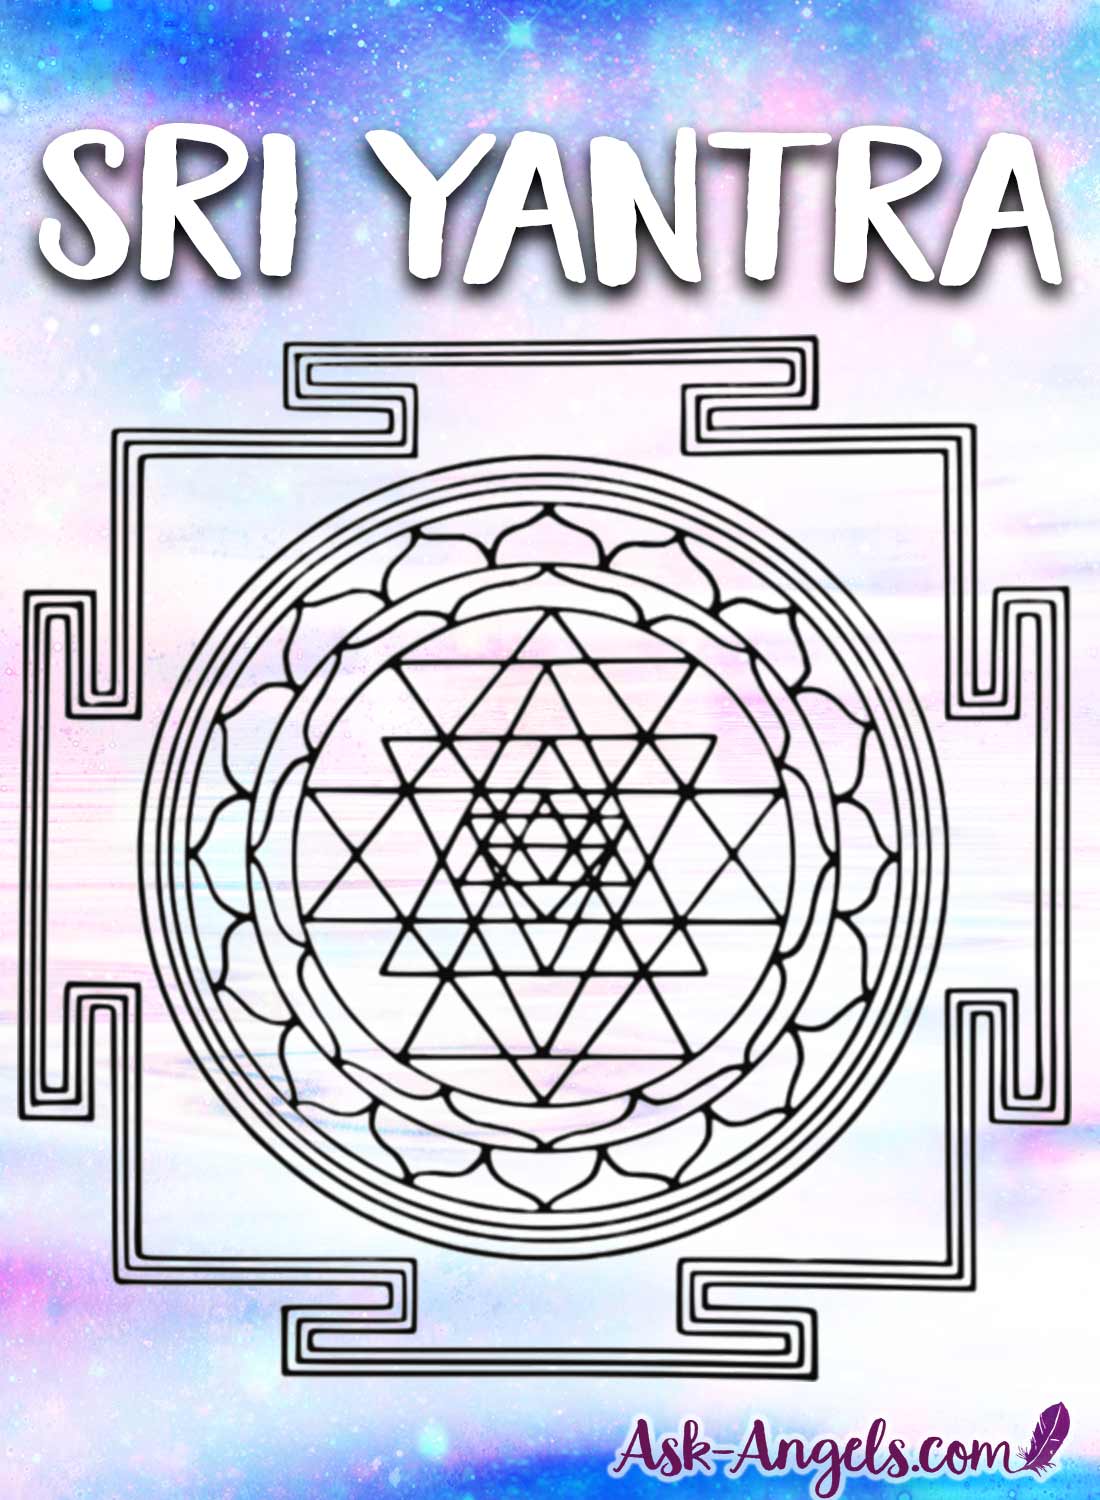 Sri Yantra